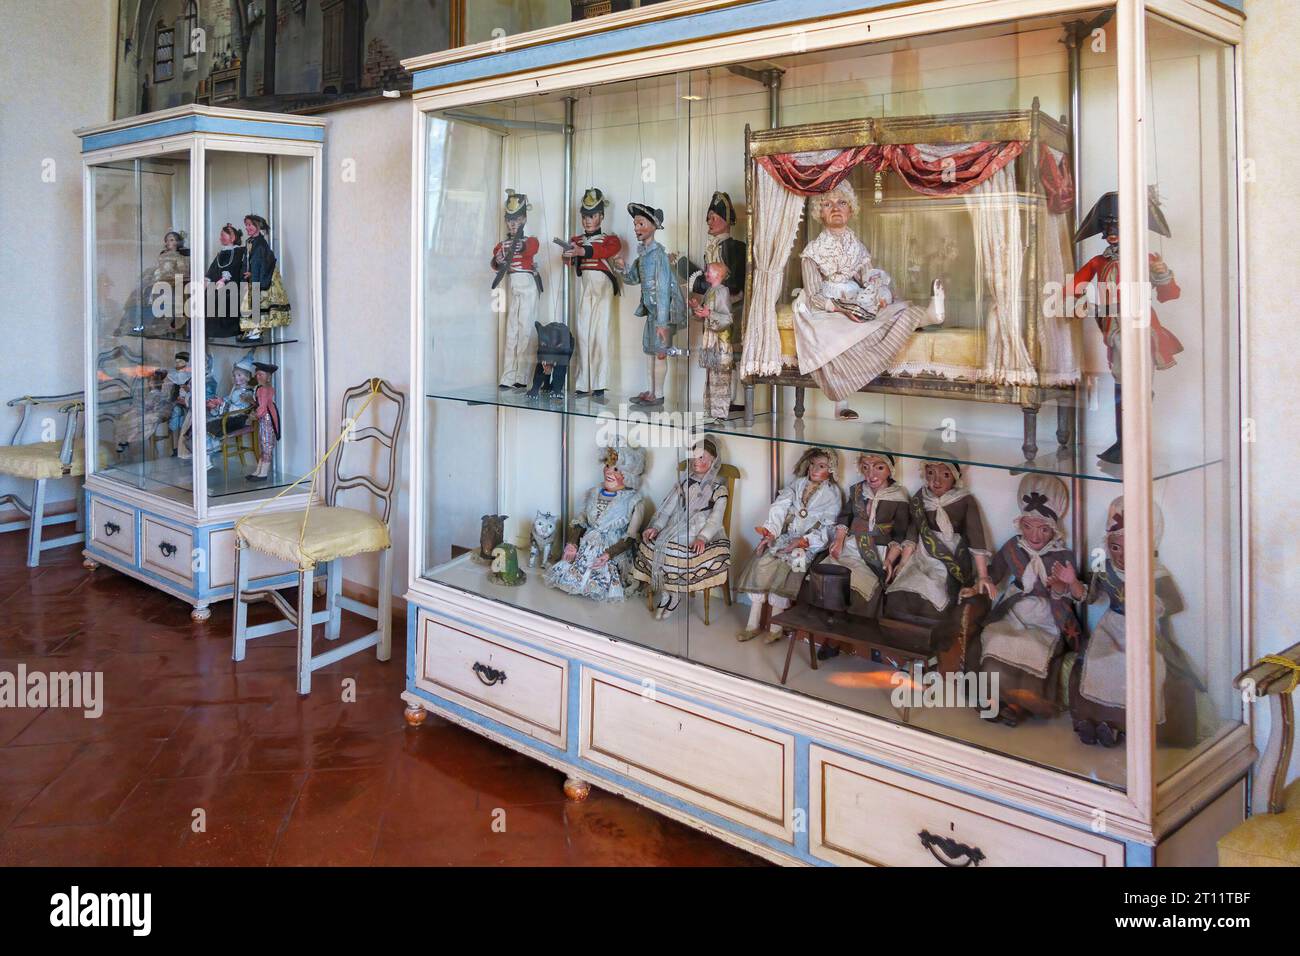 Marionettes on display at the Palazzo Borromeo palace, Isola Bella, Lake Maggiore, Lombardy, Italy, Europe Stock Photo